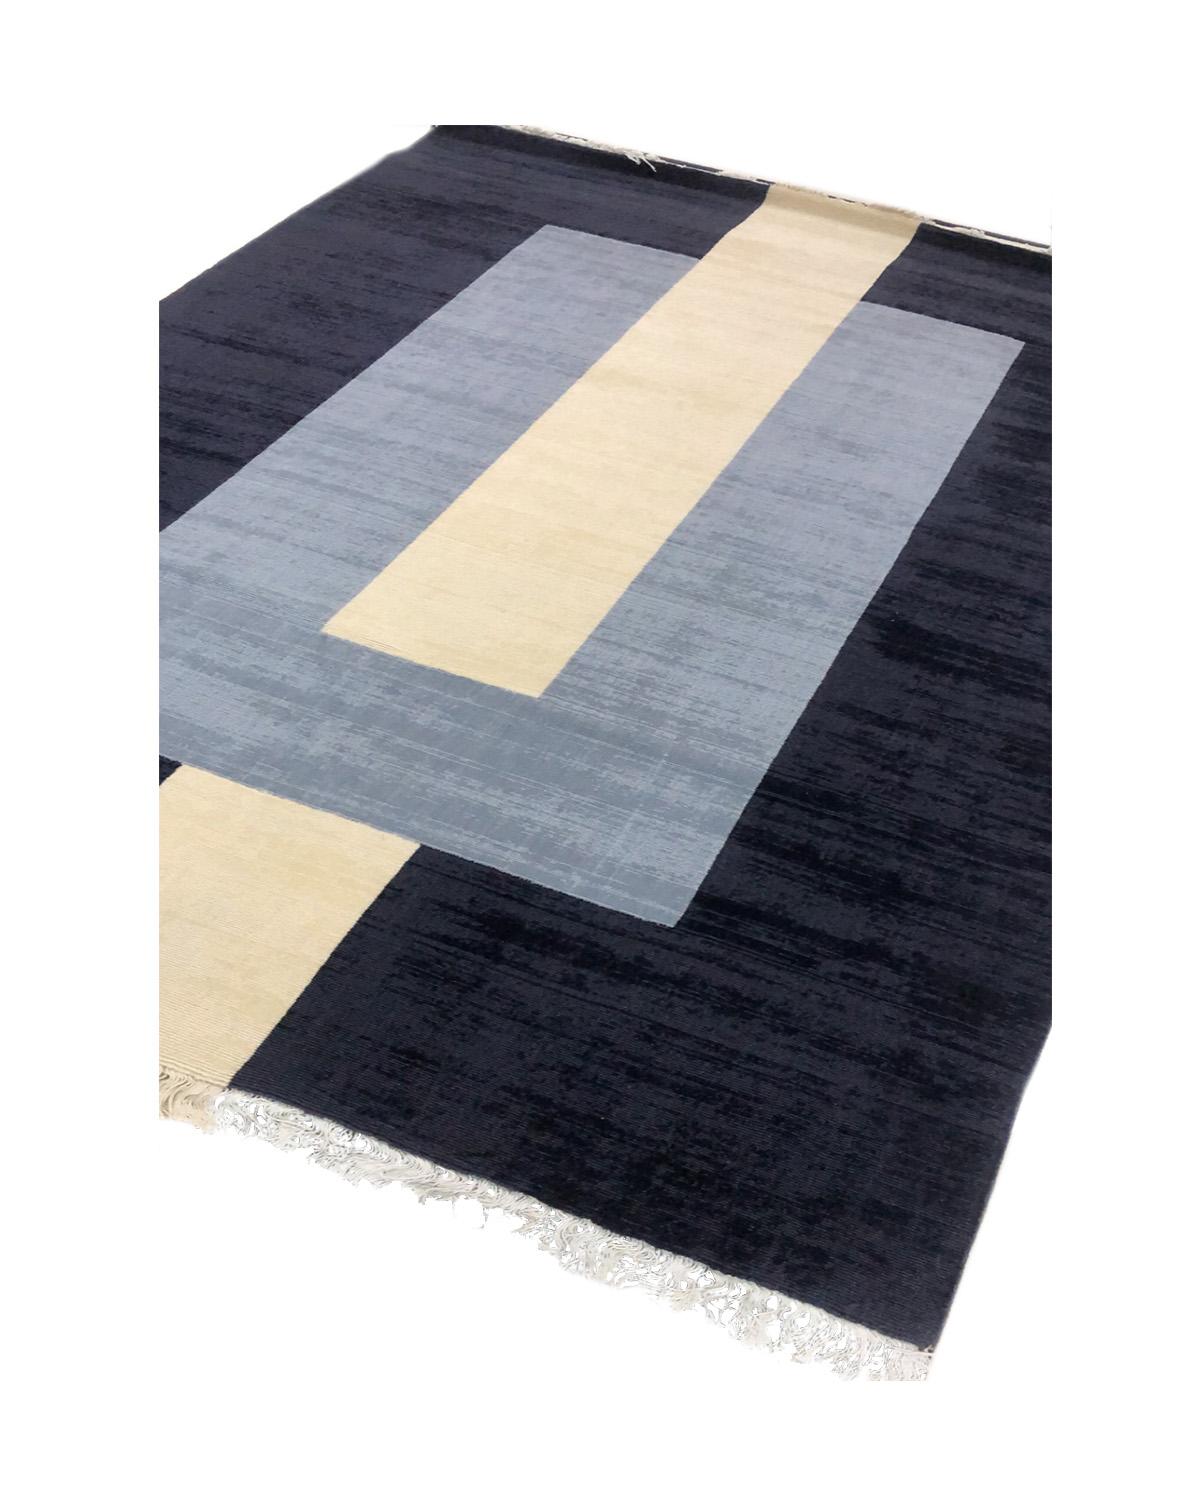 Indian Rug Grey Wool Modern Geometric Black Cream Large Carpet Handmade line with pile For Sale